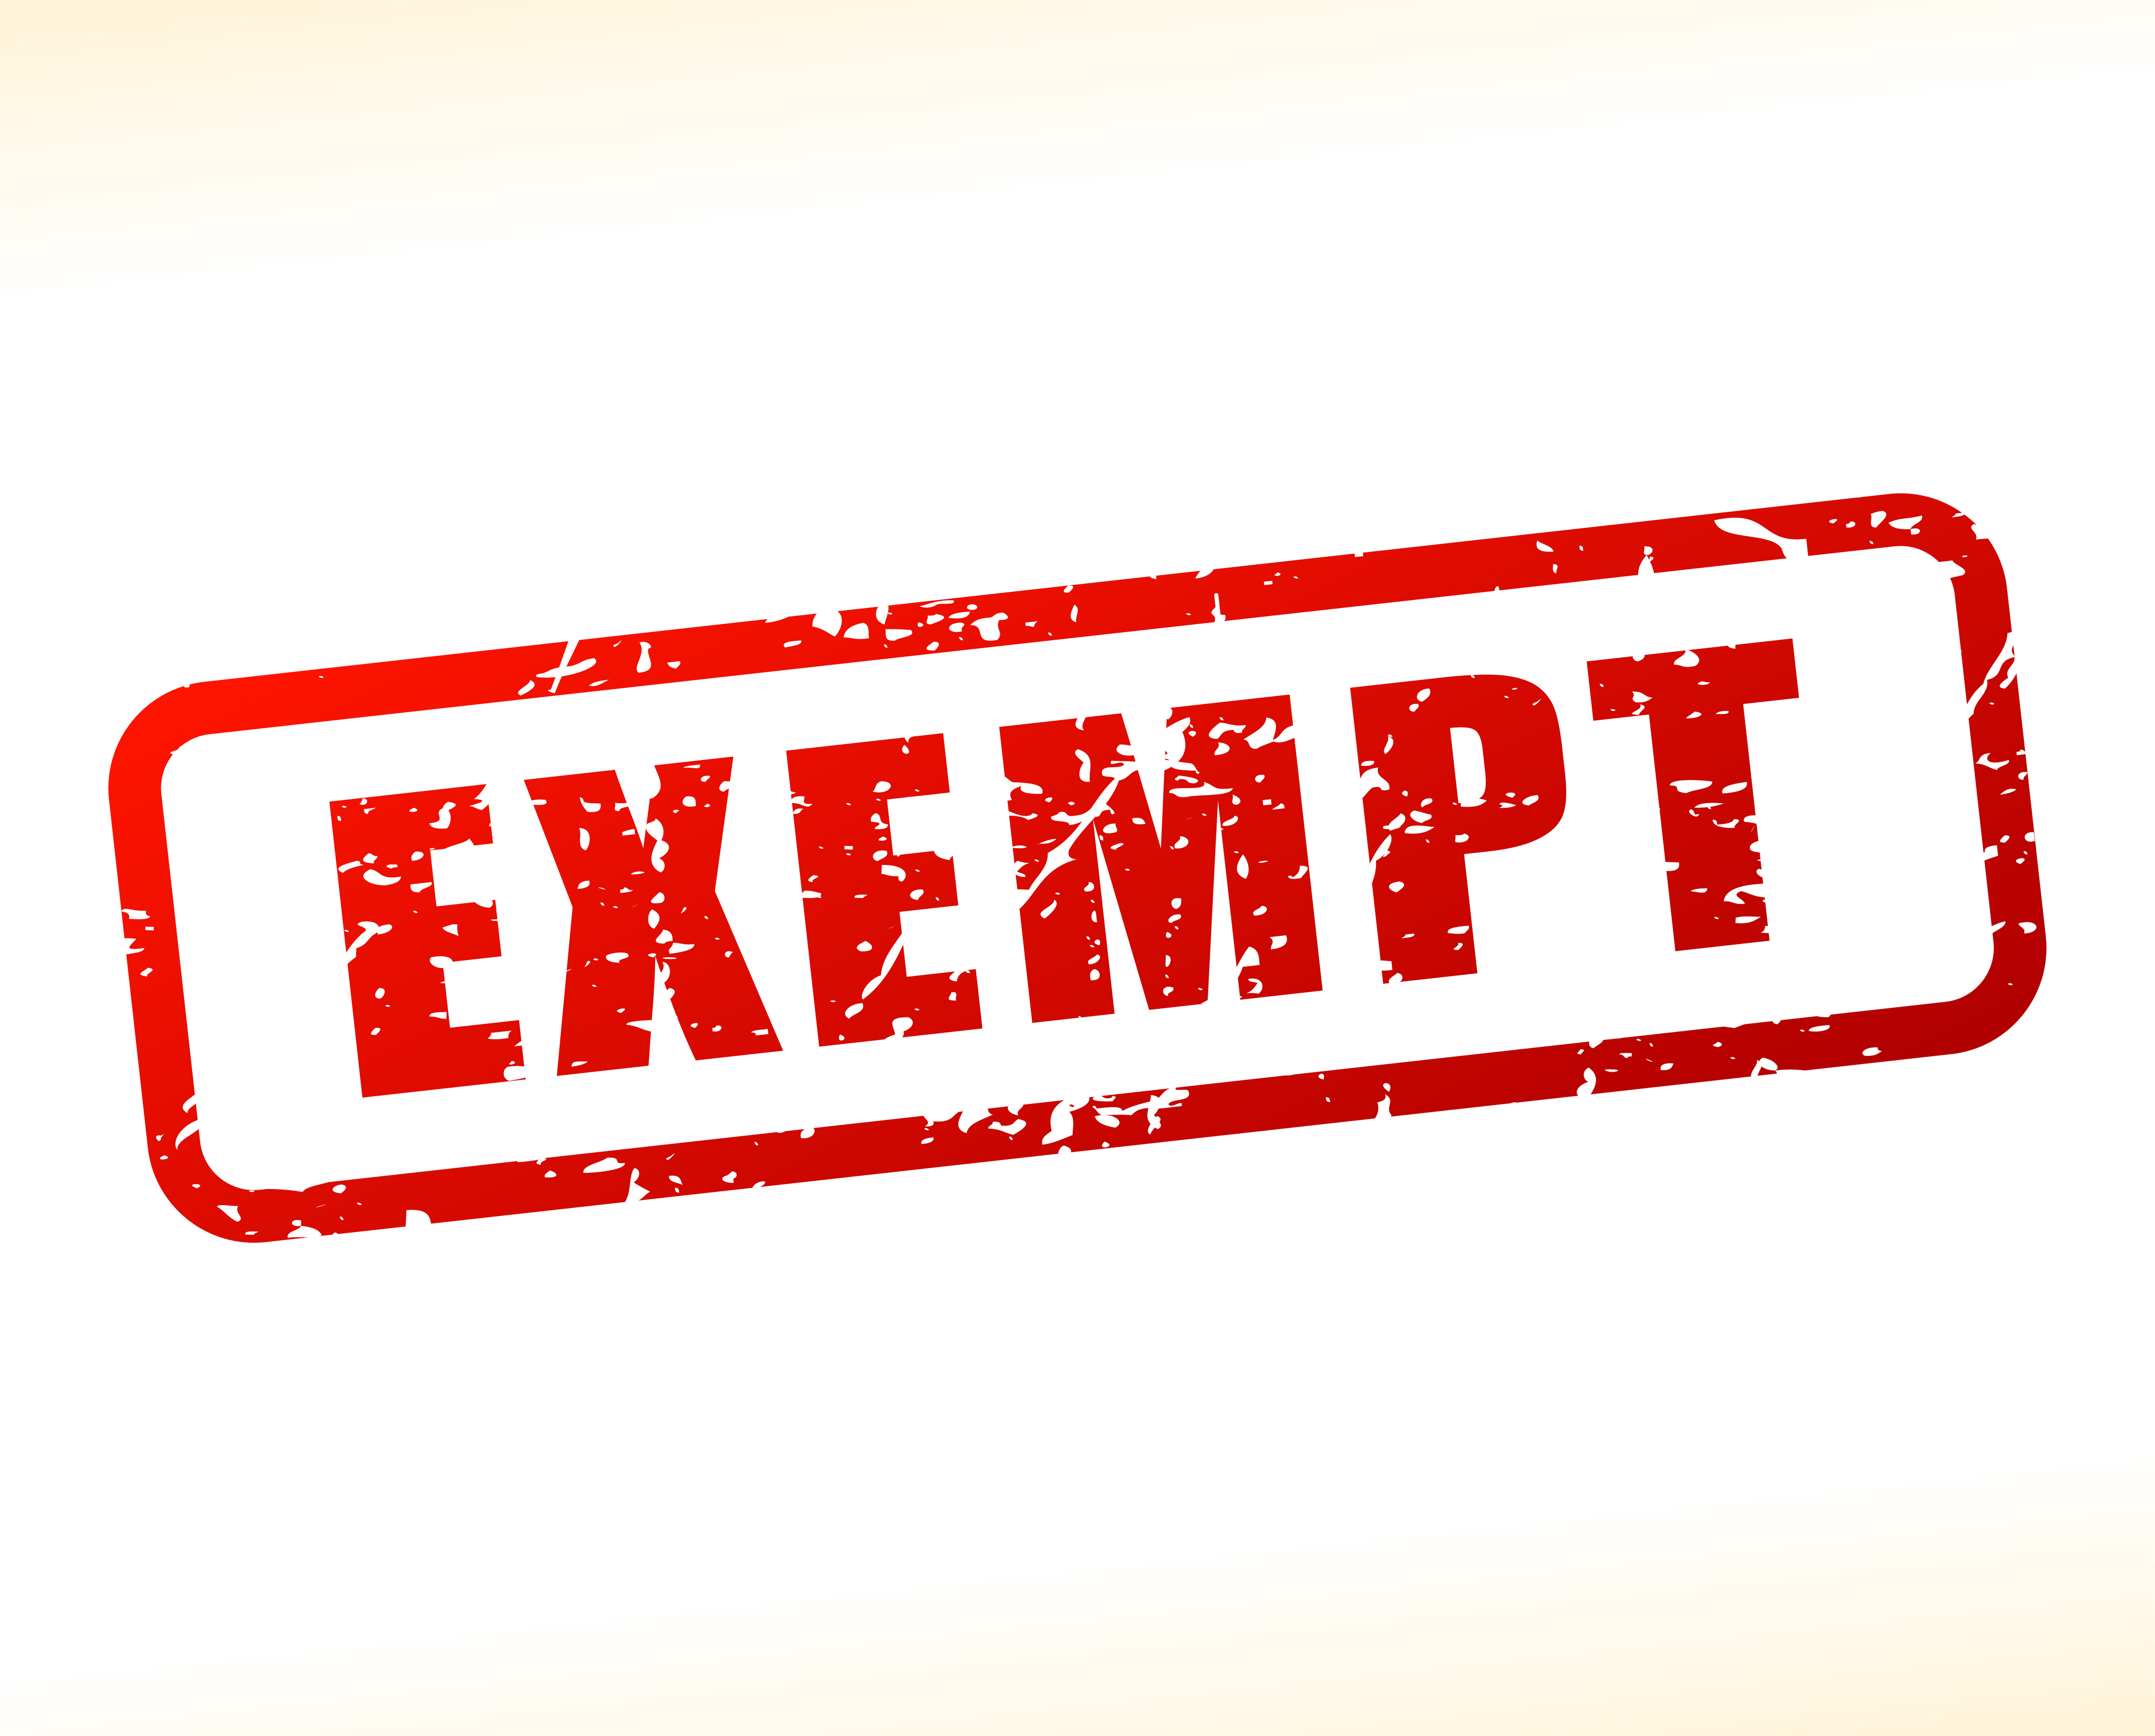 HMDA Small Filer Exempt Data